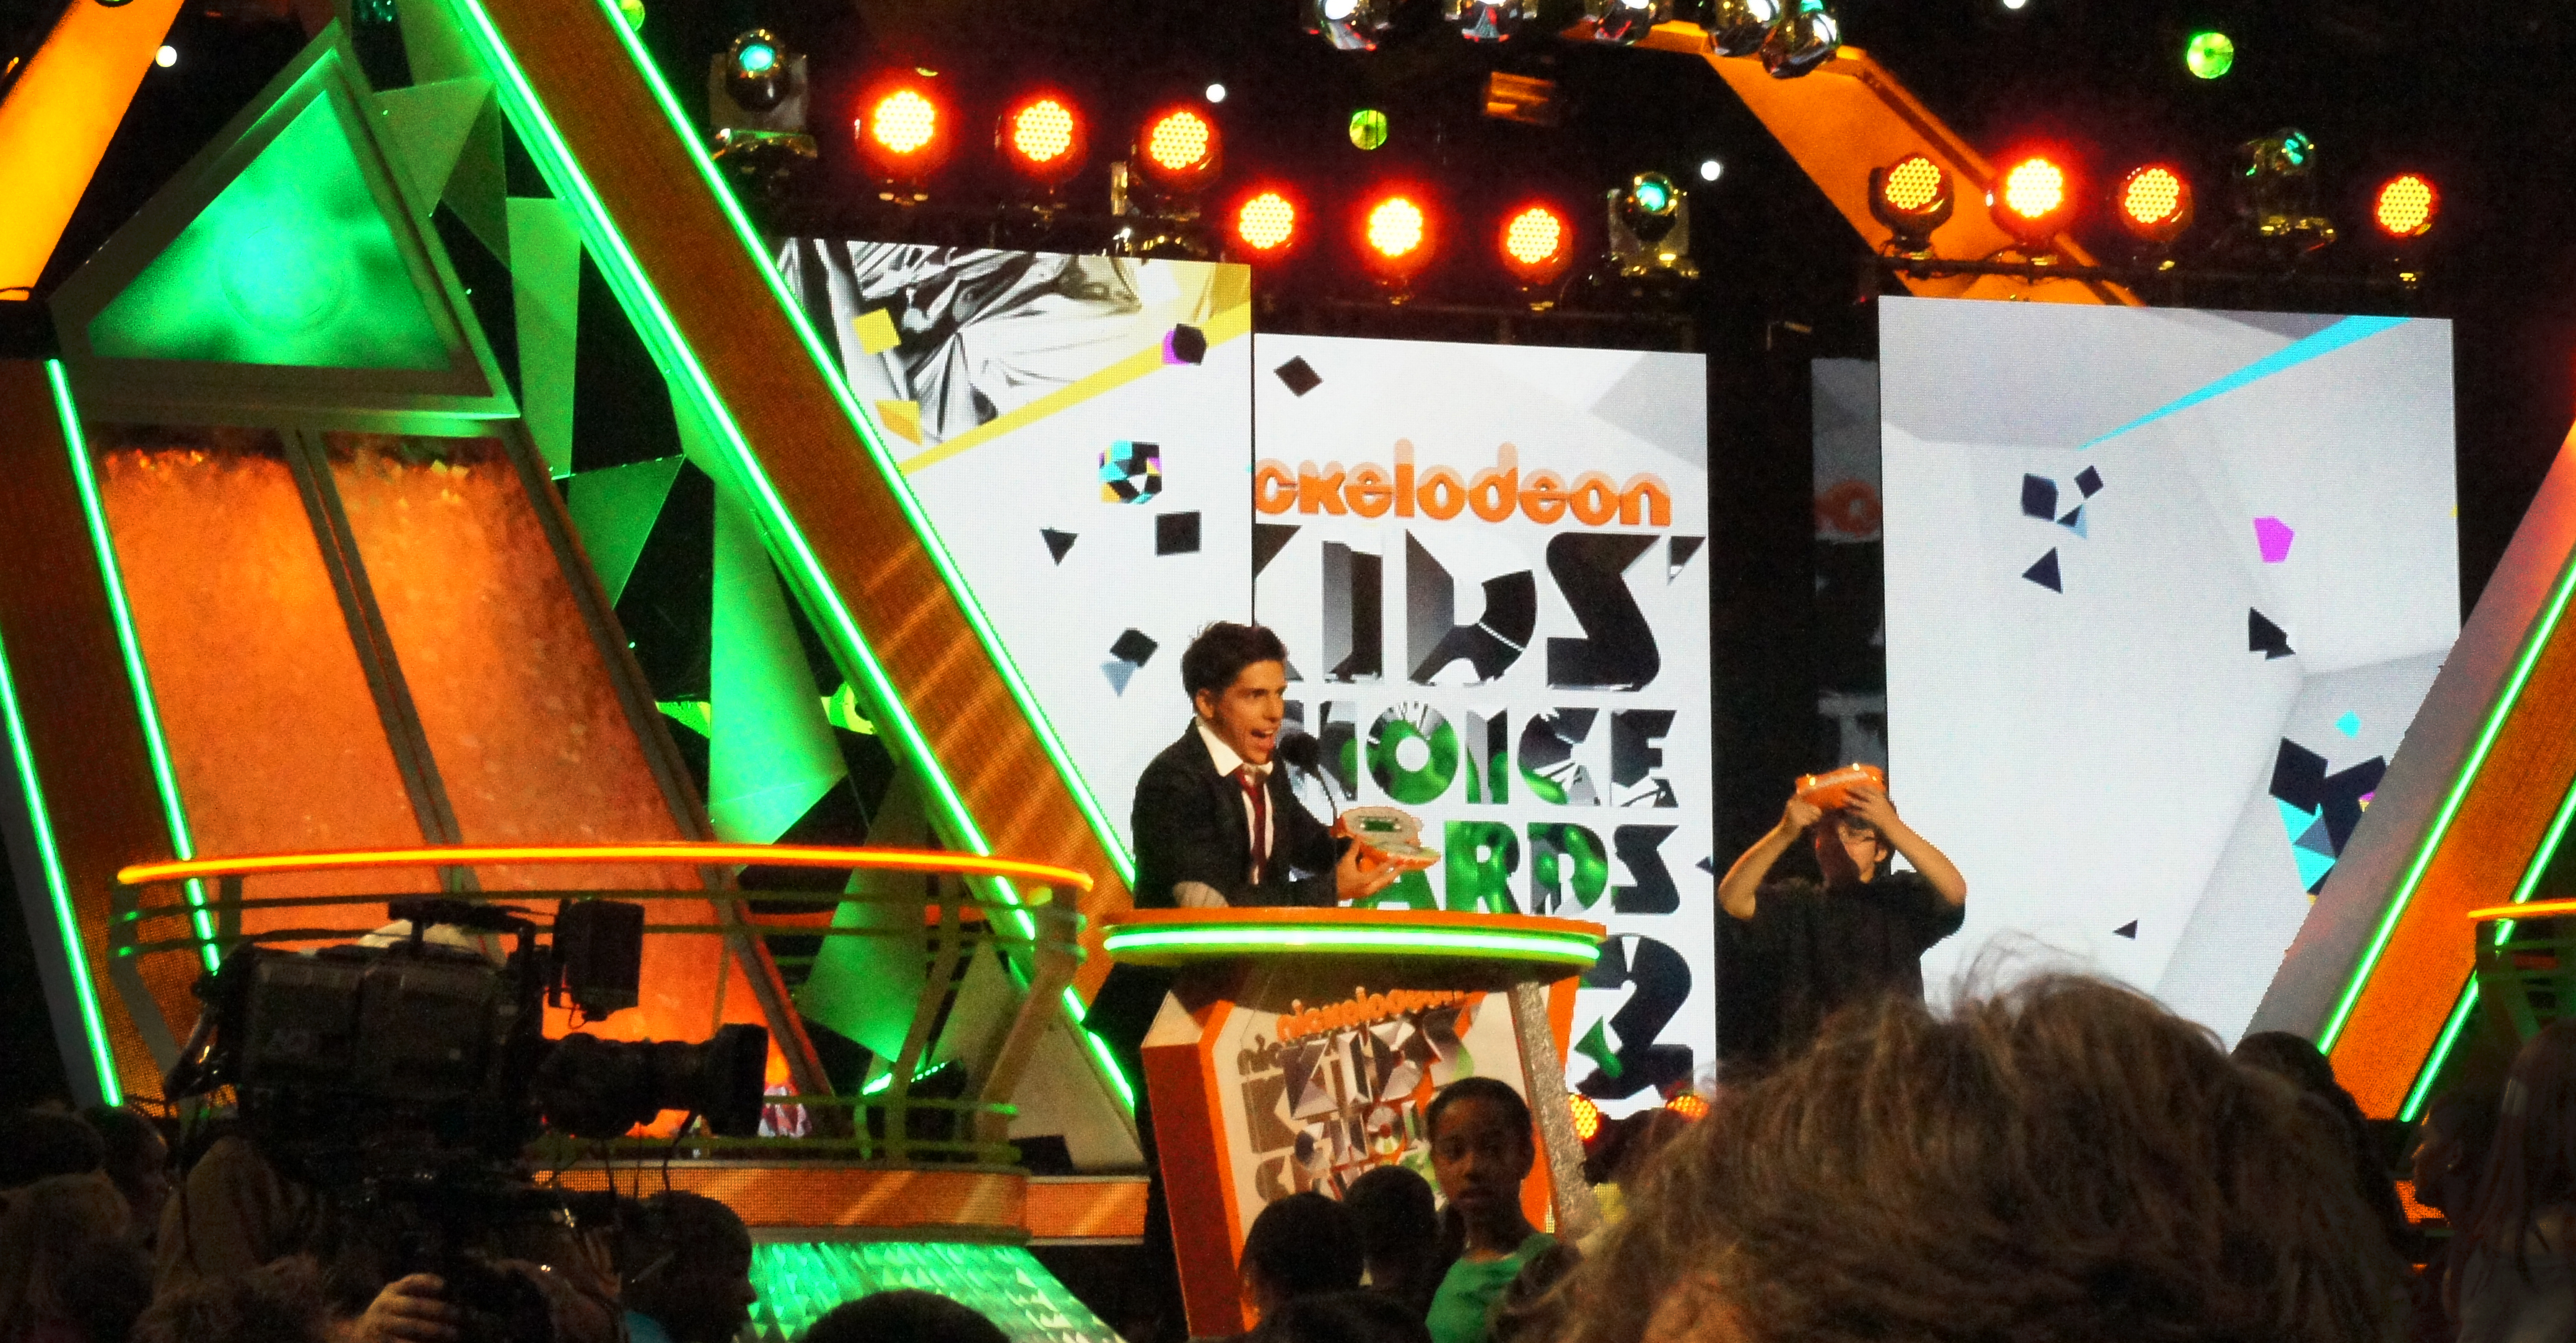 Presenting an award - Nickelodeon Kids Choice Awards 2013